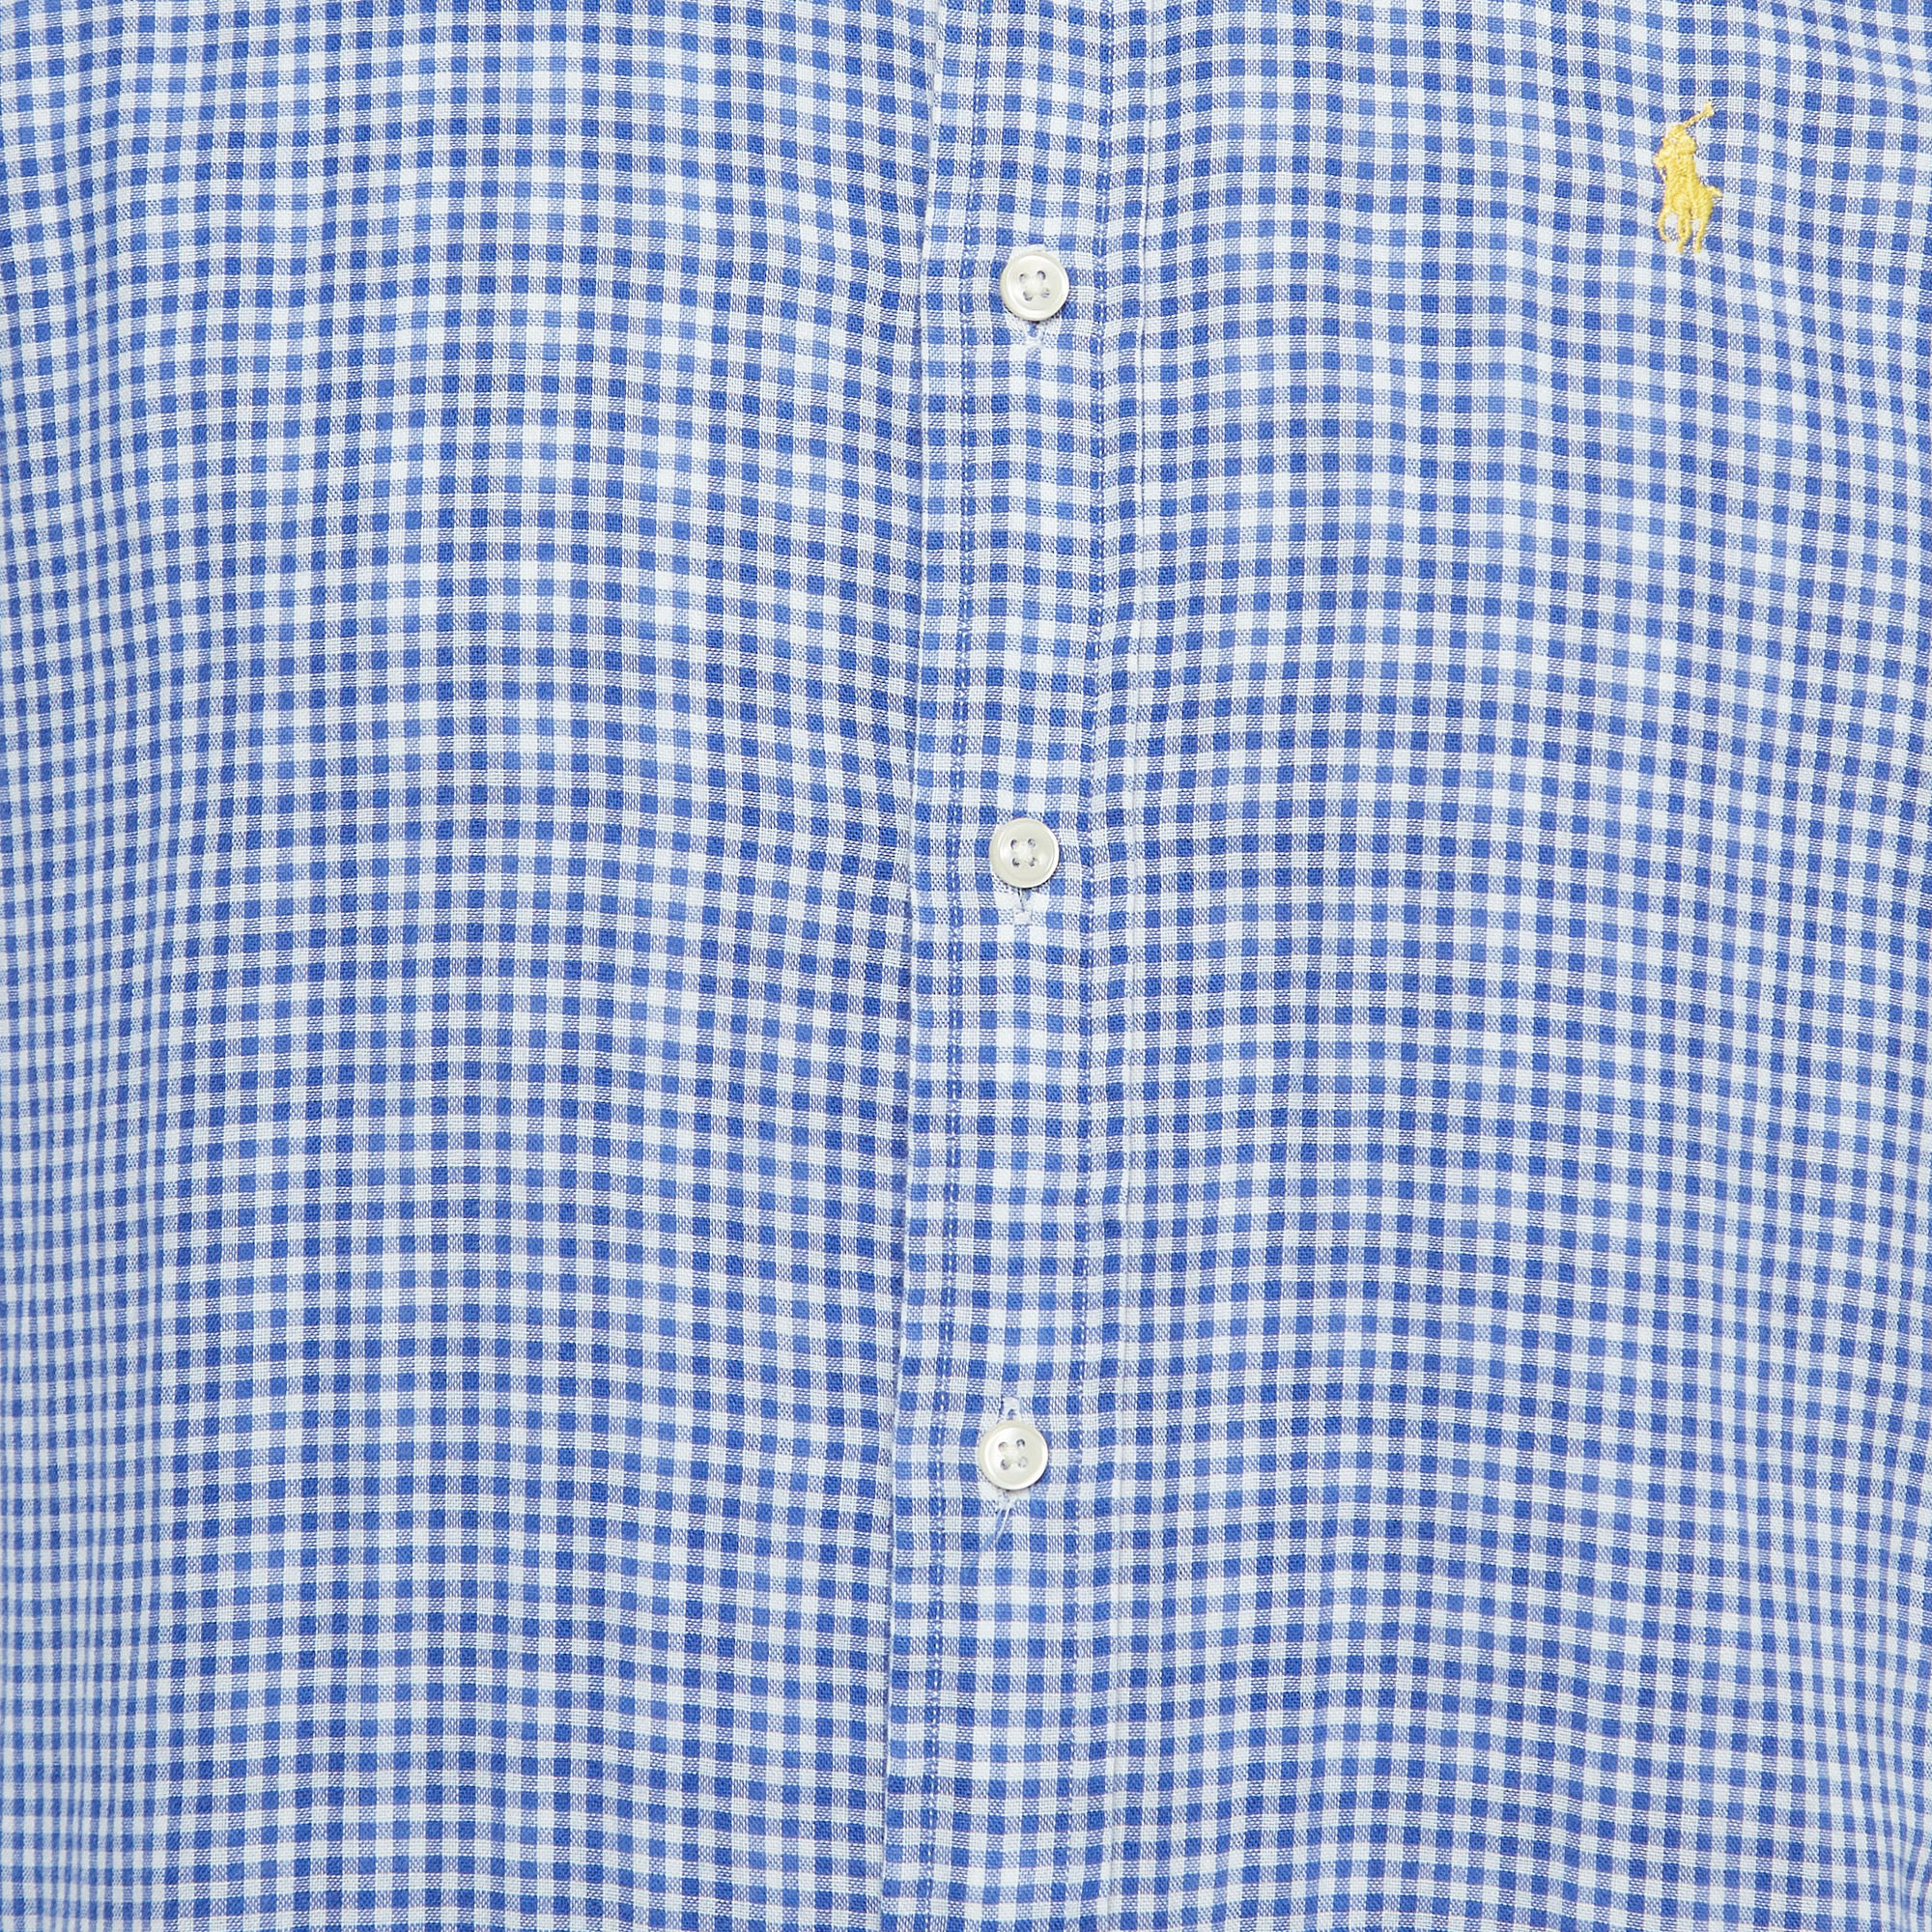 Polo Ralph Lauren Blue Checked Cotton Button Front Shirt S